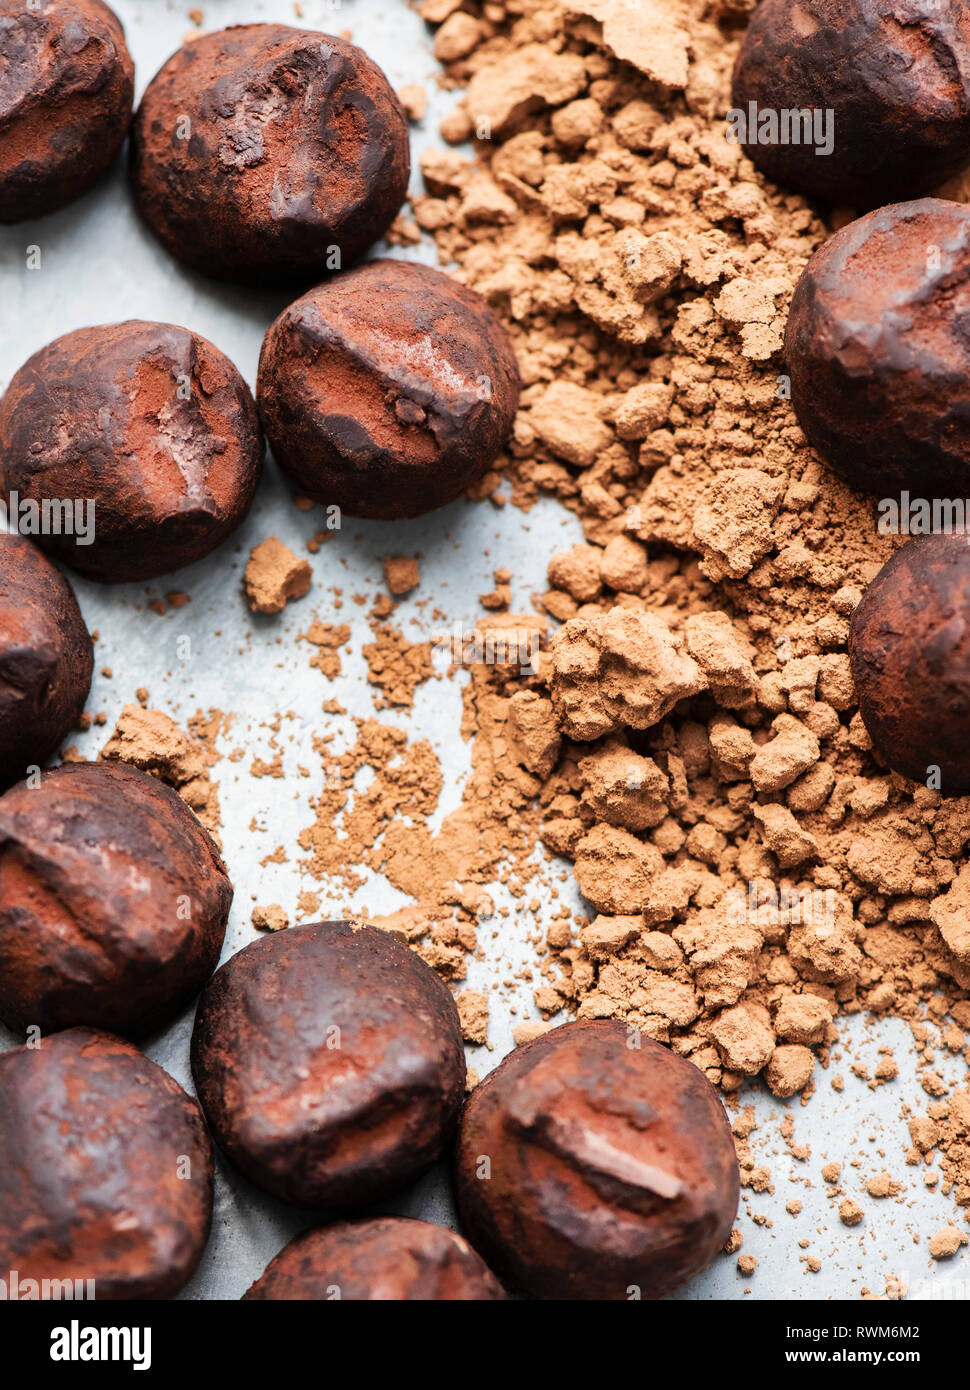 Chocolate truffles and cocoa powder Stock Photo